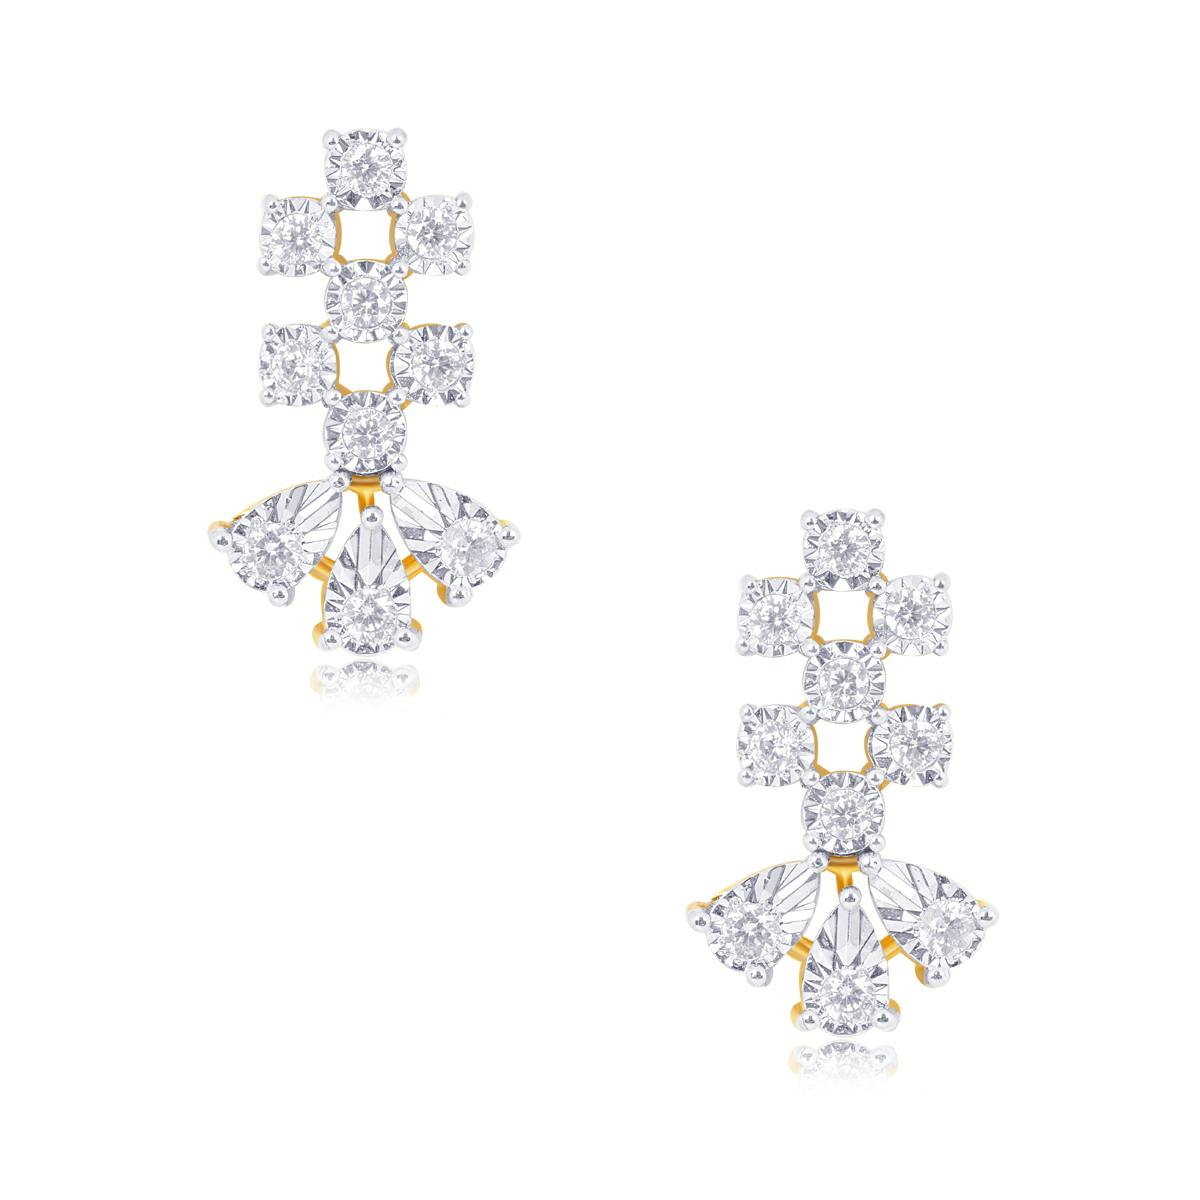 Amvi diamond earrings